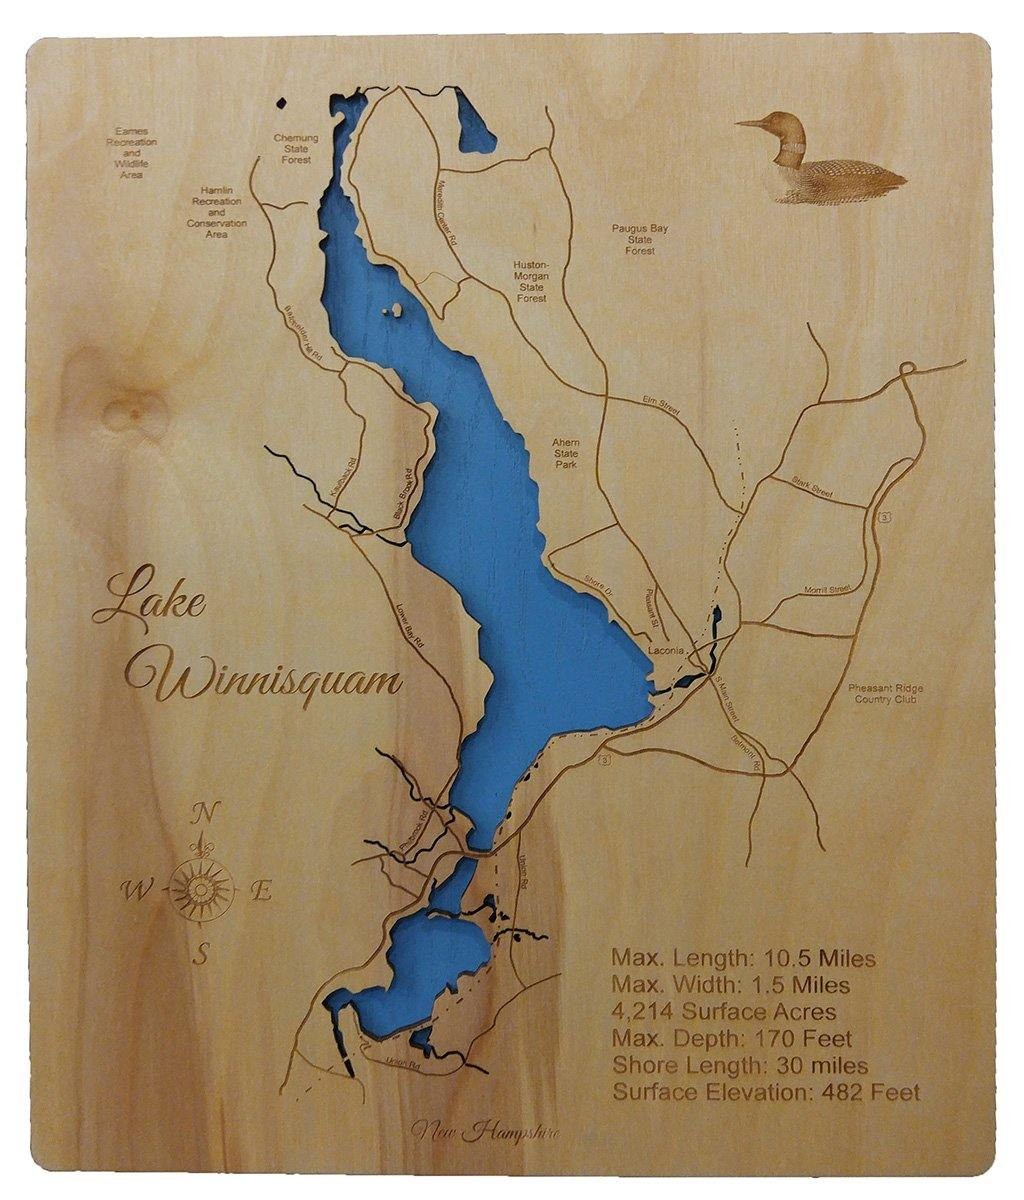 winnisquam lake map - Lake Winnisquam, New Hampshire - laser cut wood map